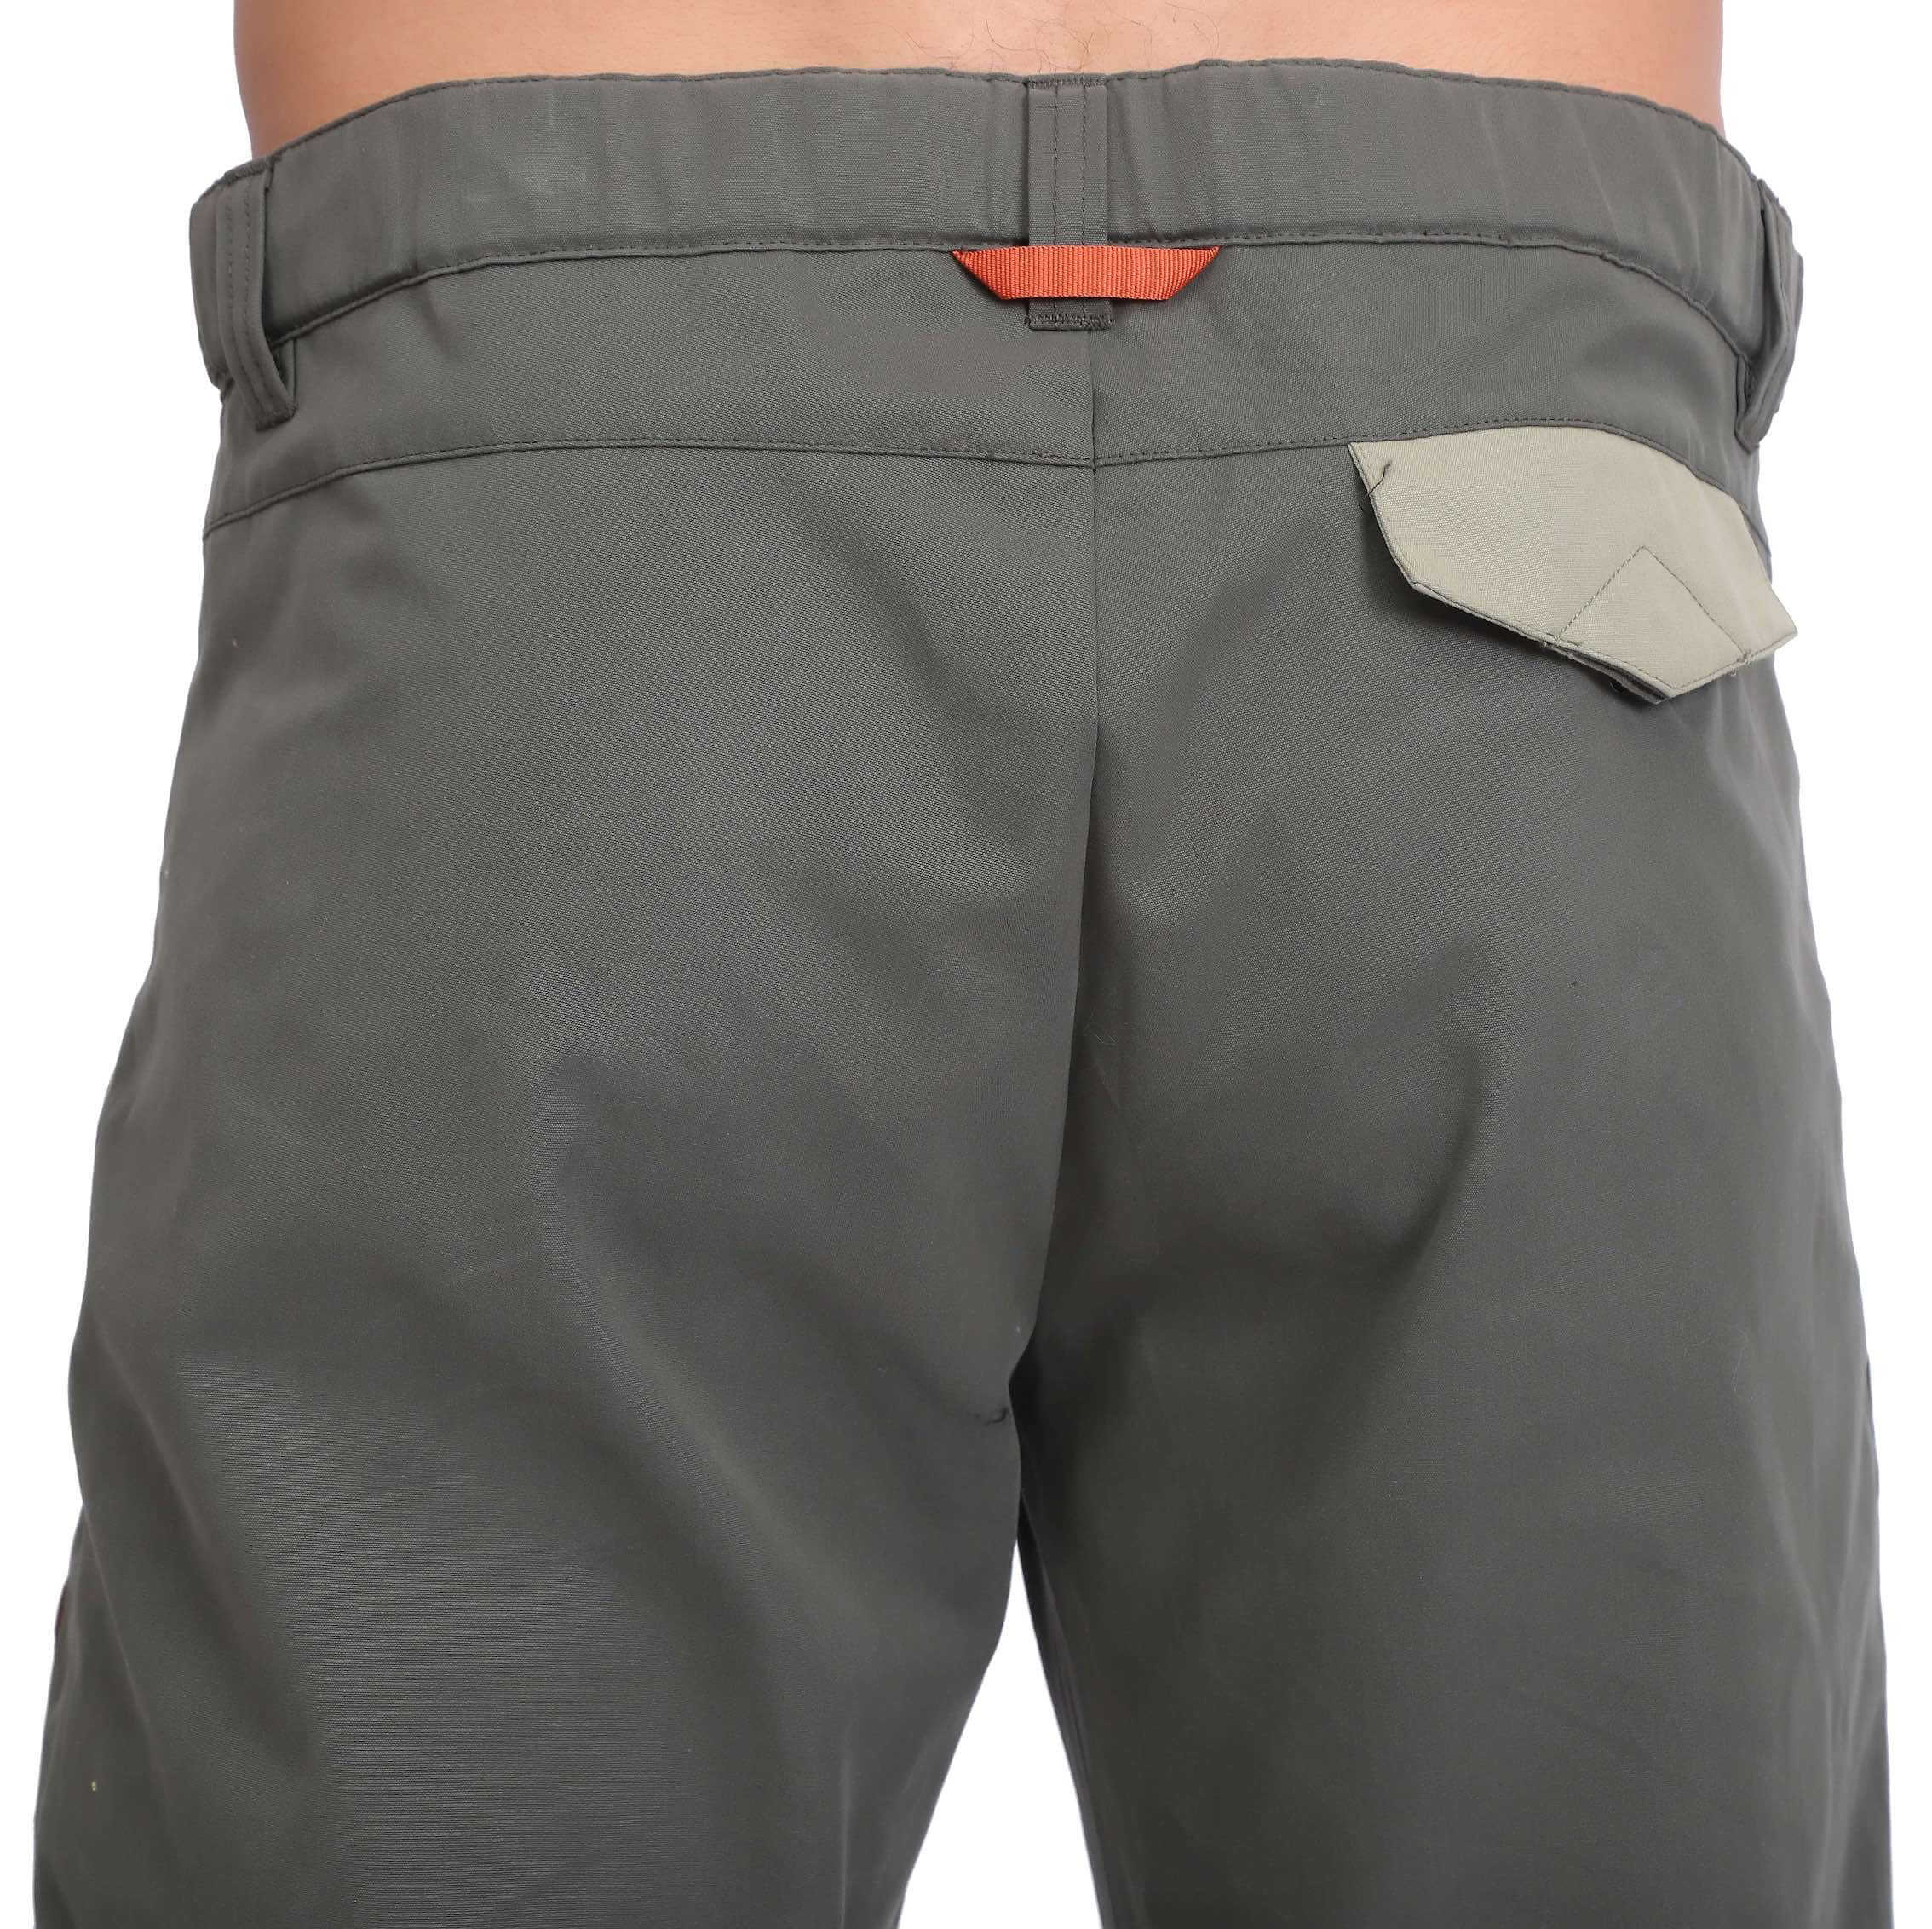 Pantalones cargo de montaña impermeables de secado rápido para hombres al aire libre